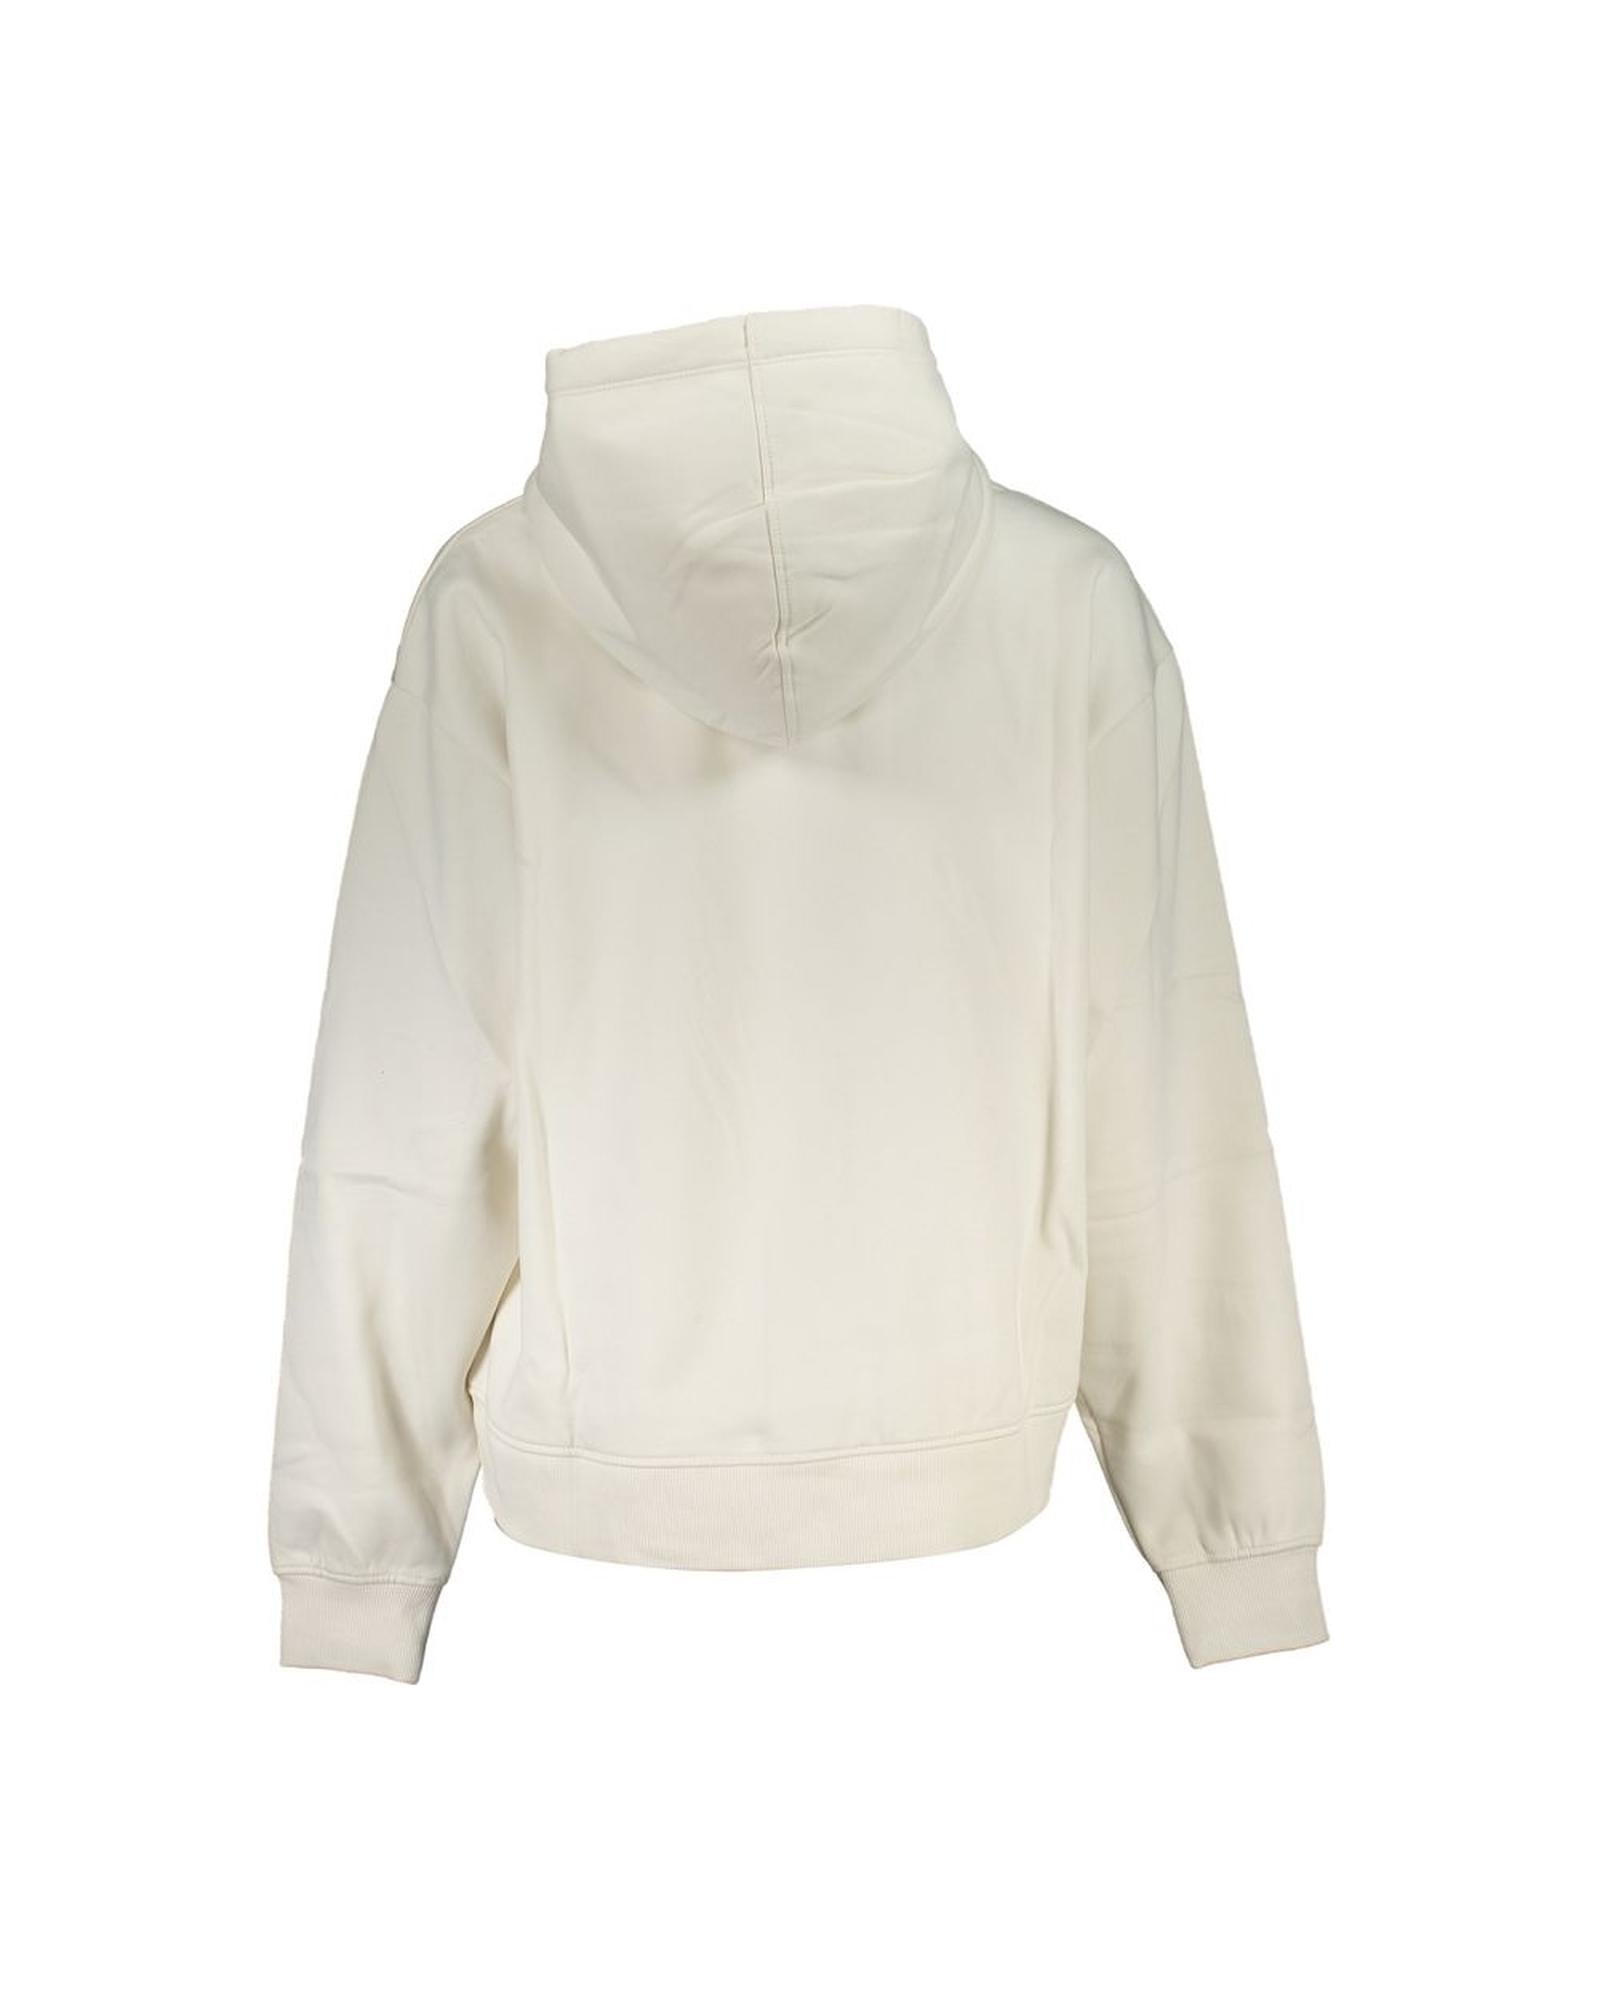 Women's White Cotton Sweater - XS